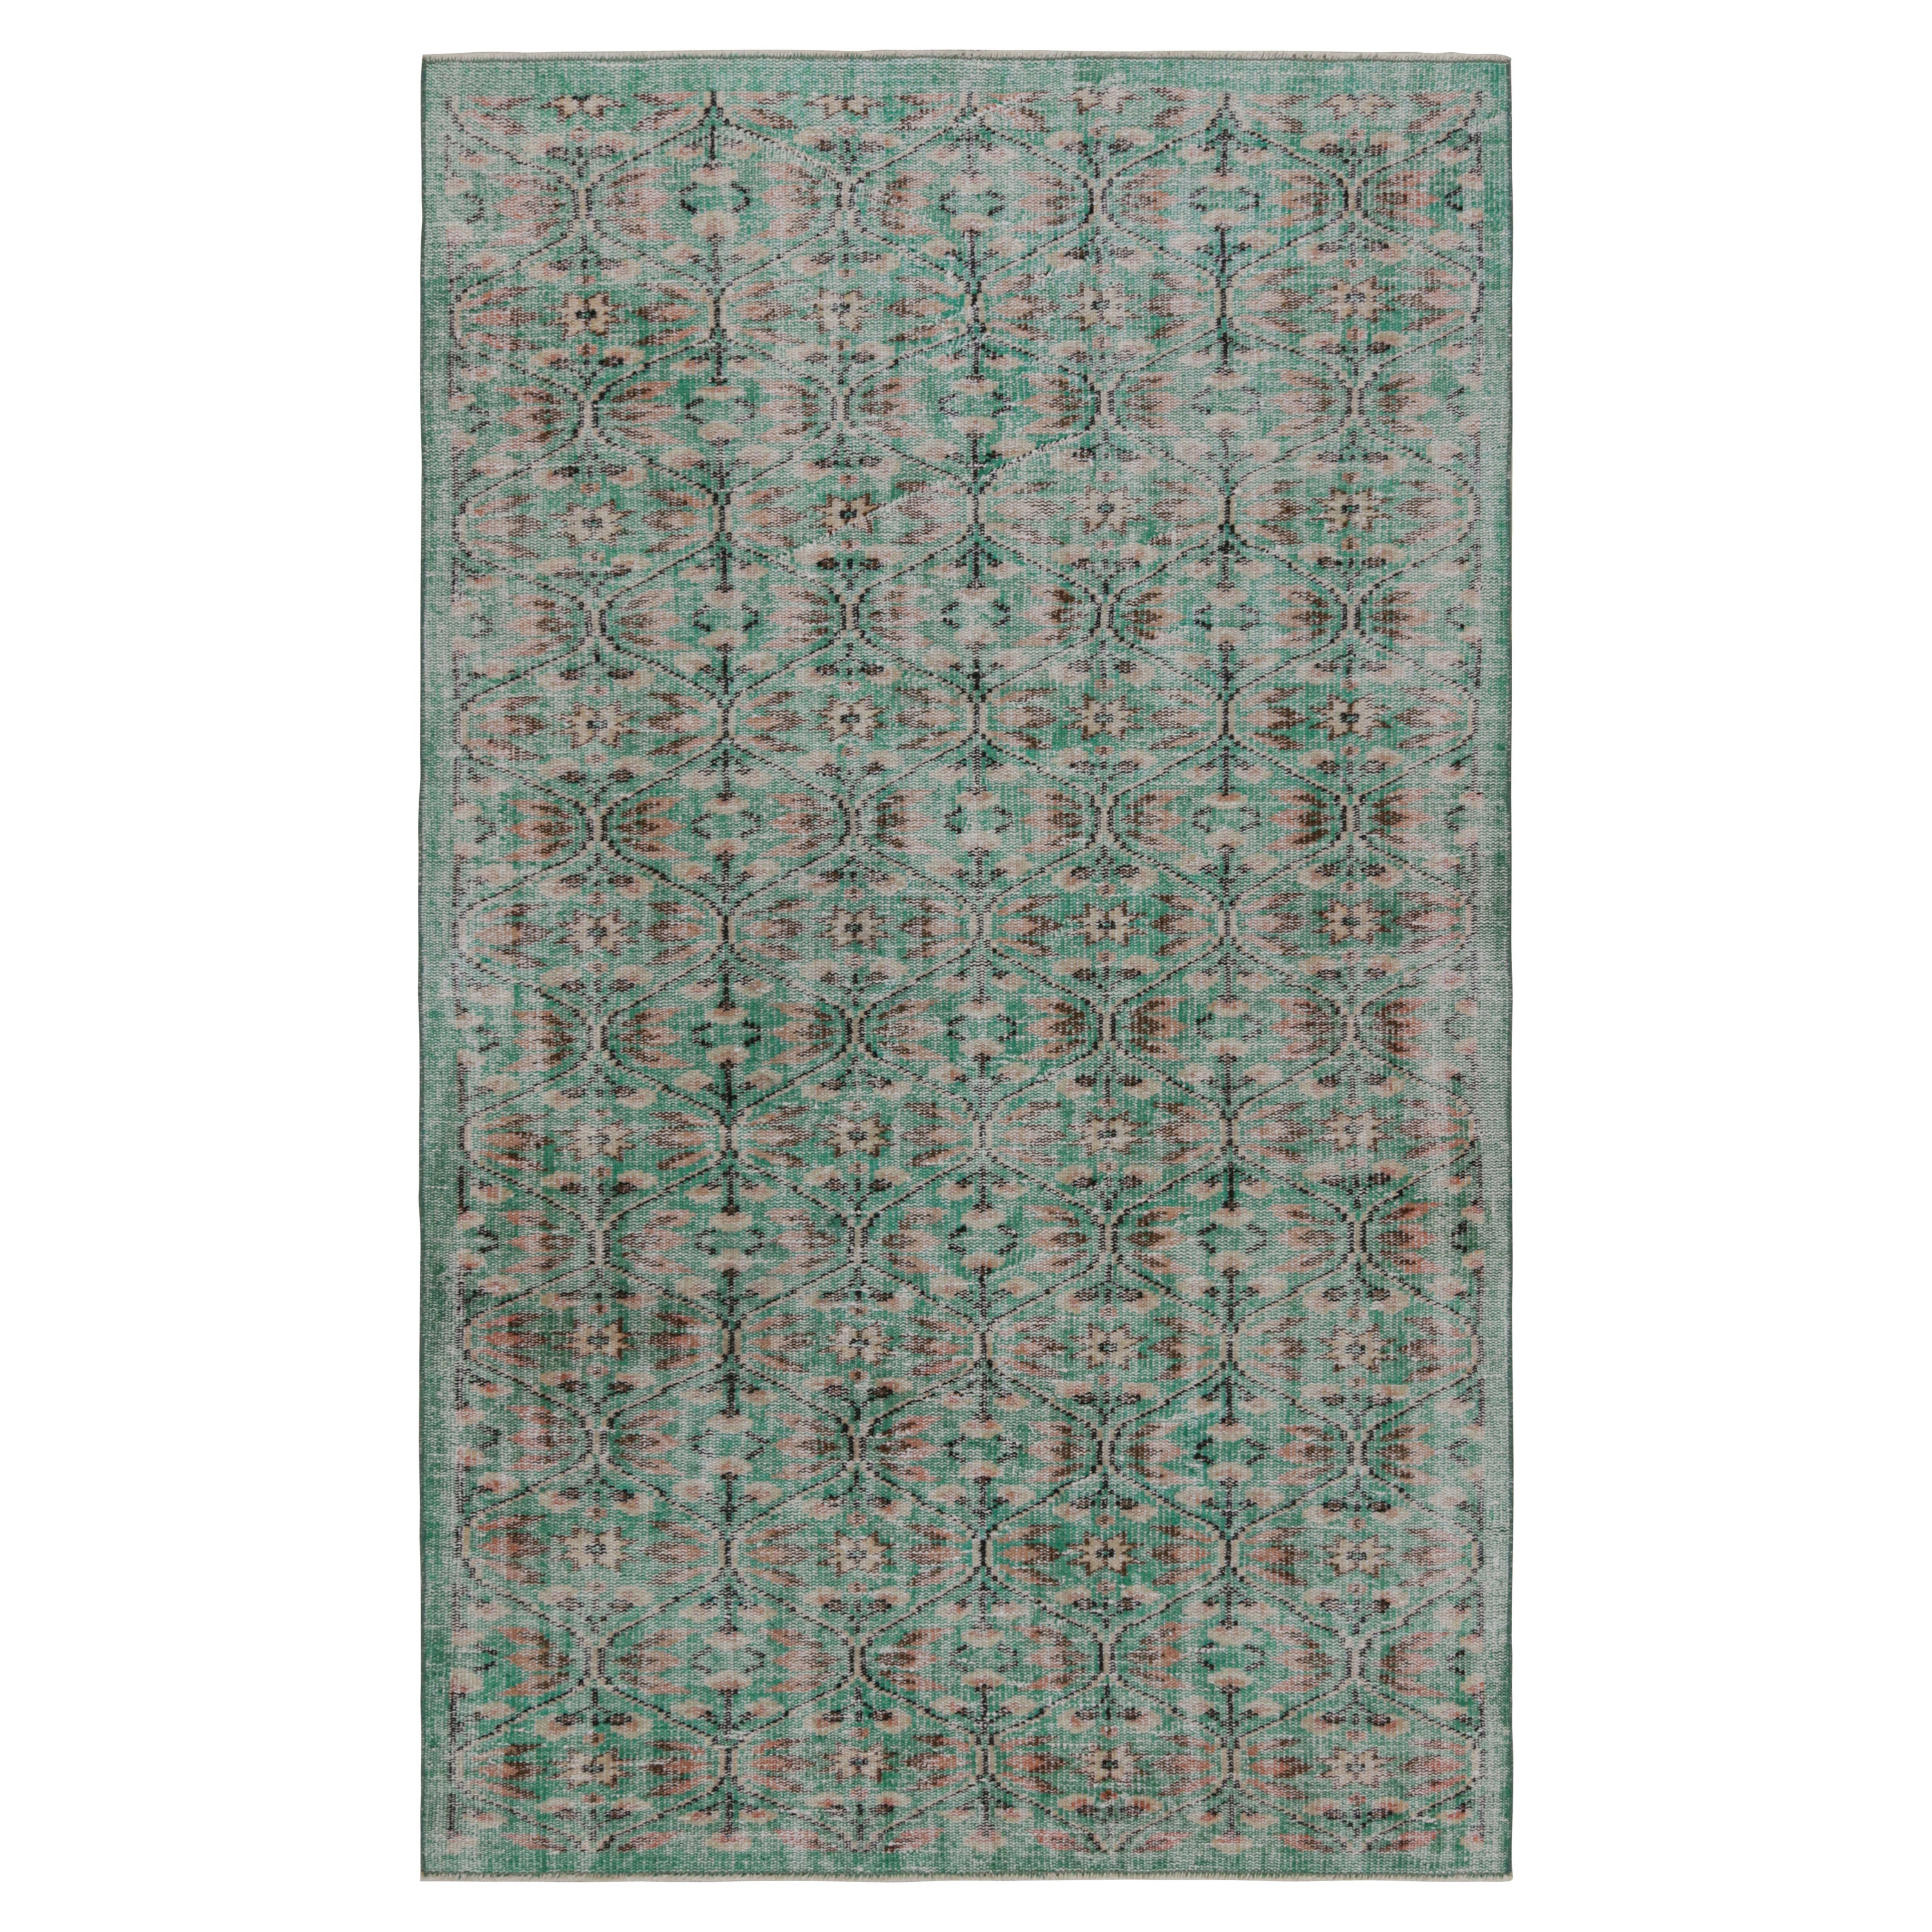 Vintage Zeki Müren Rug in Teal with Geometric Patterns, from Rug & Kilim For Sale